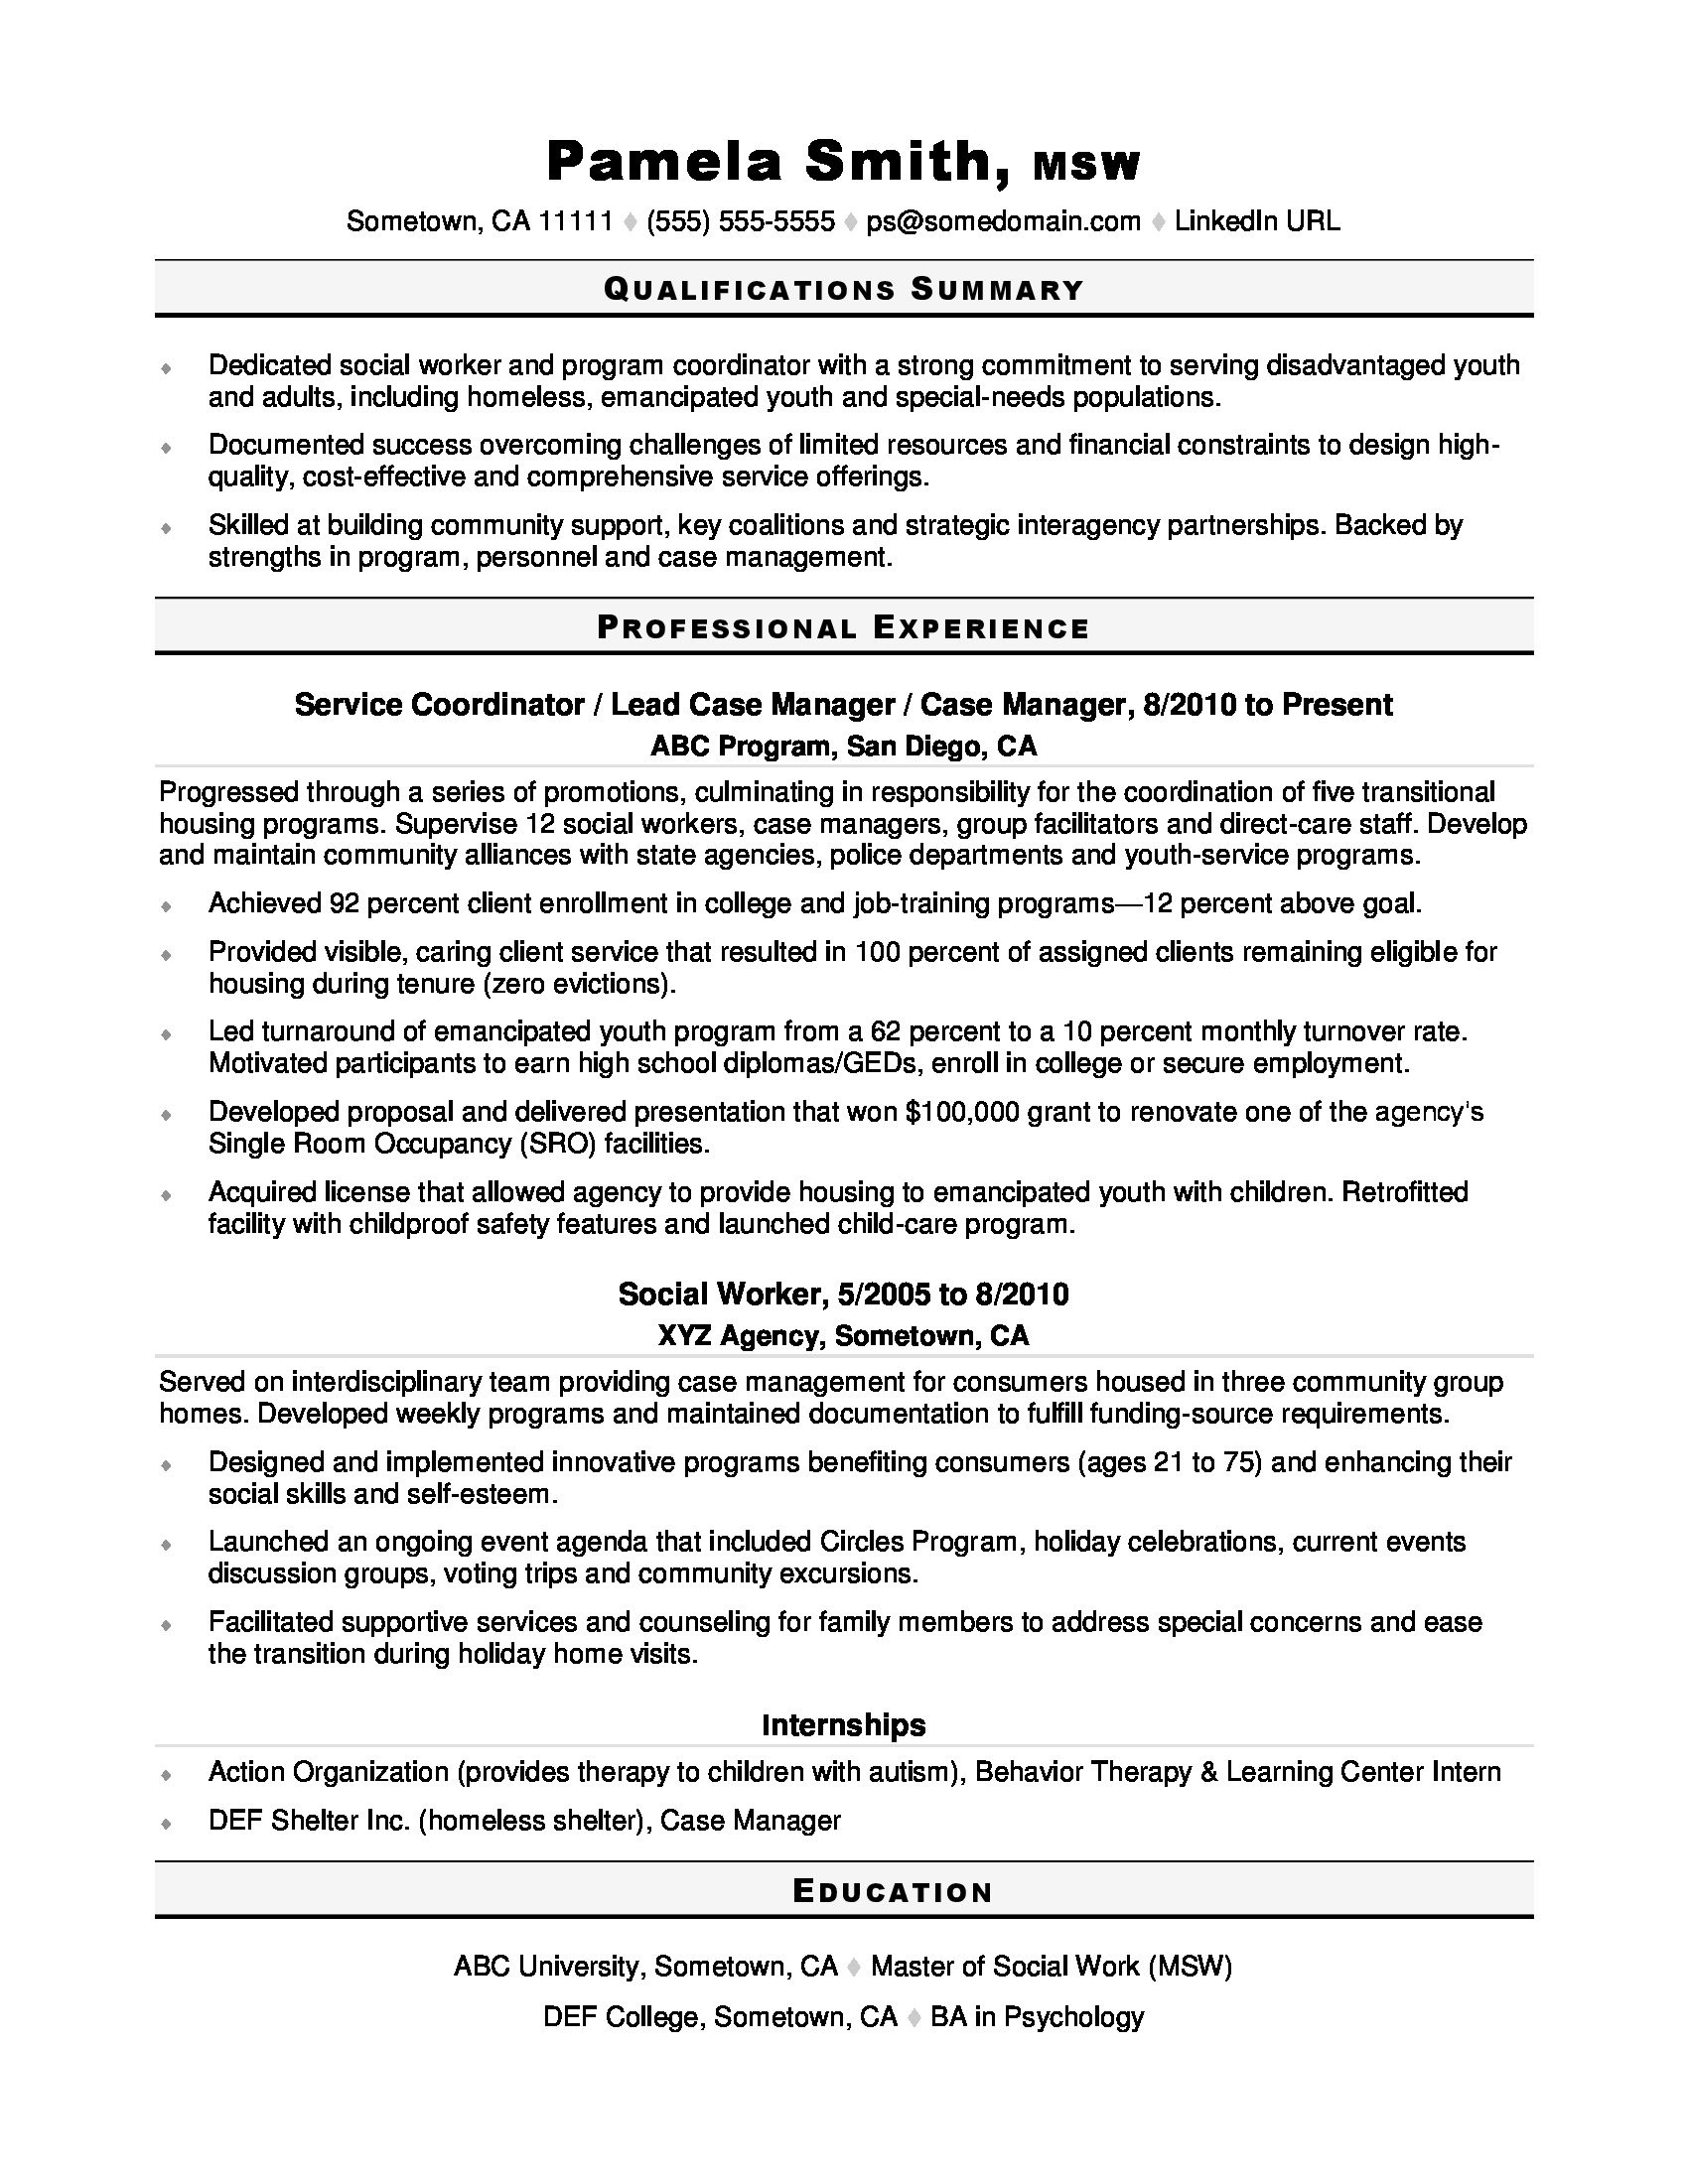 Self Employed Search Engine Evaluator Resume Sample social Work Resume Monster.com